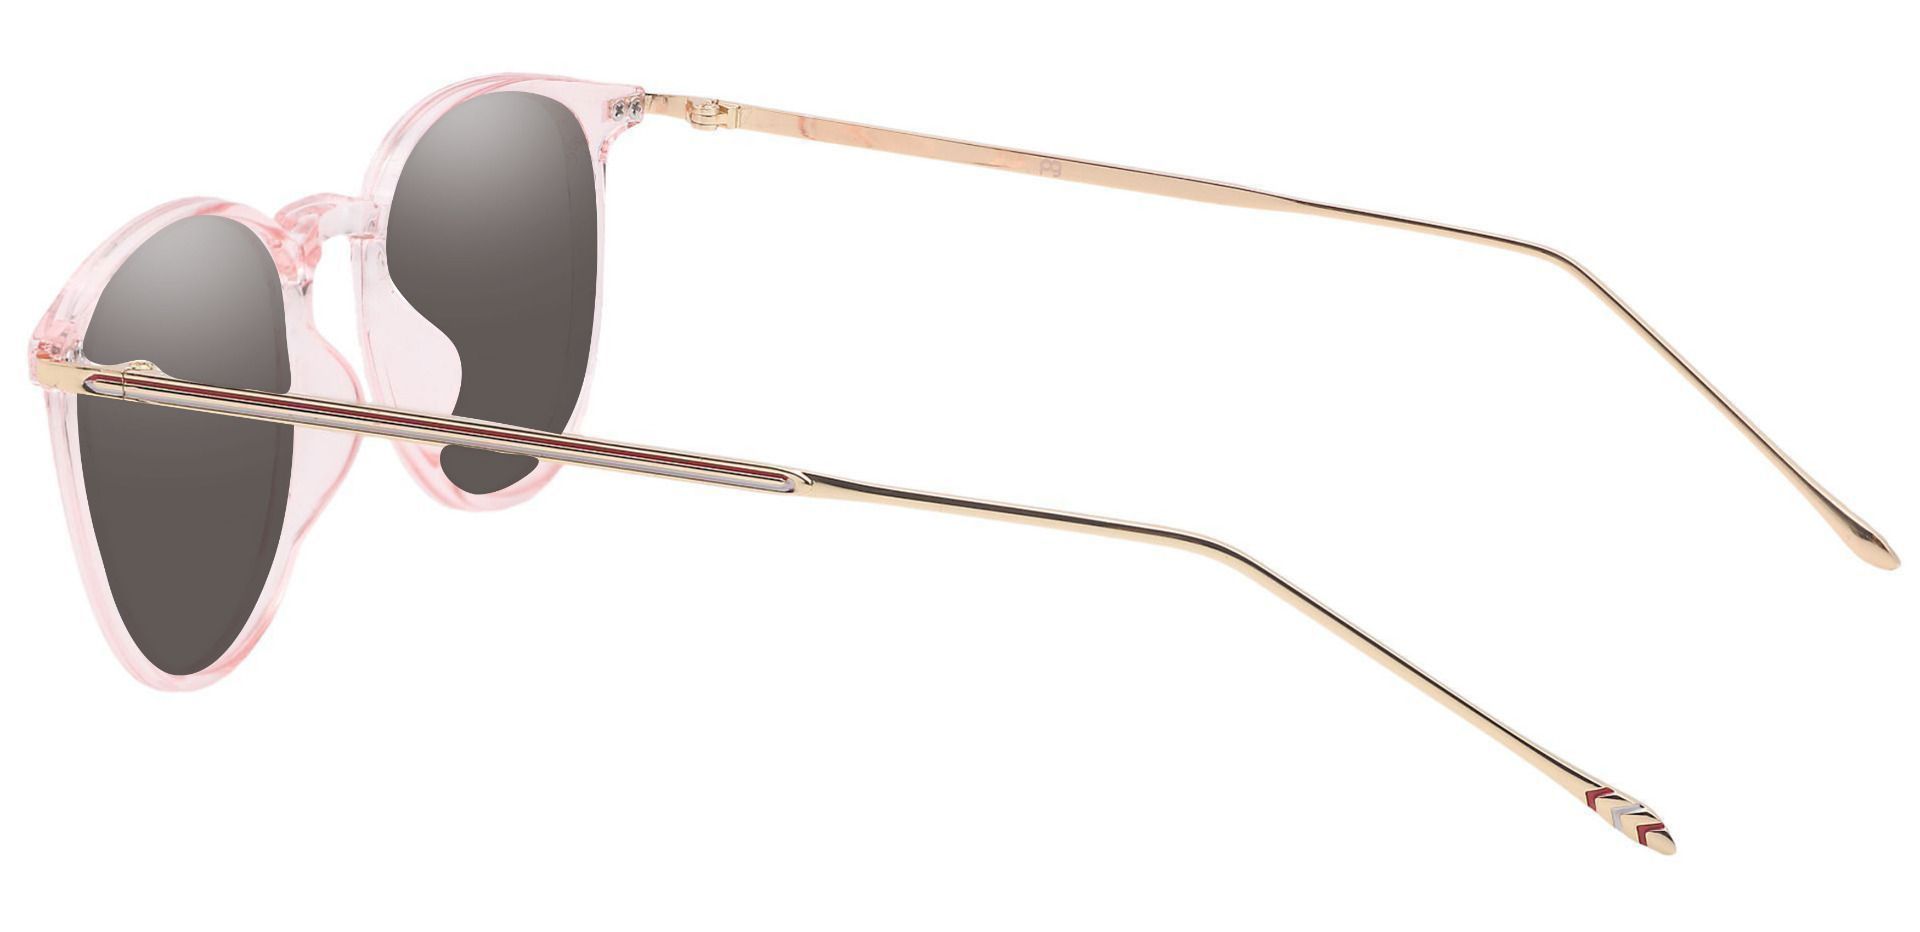 Elliott Round Prescription Sunglasses - Pink Frame With Gray Lenses